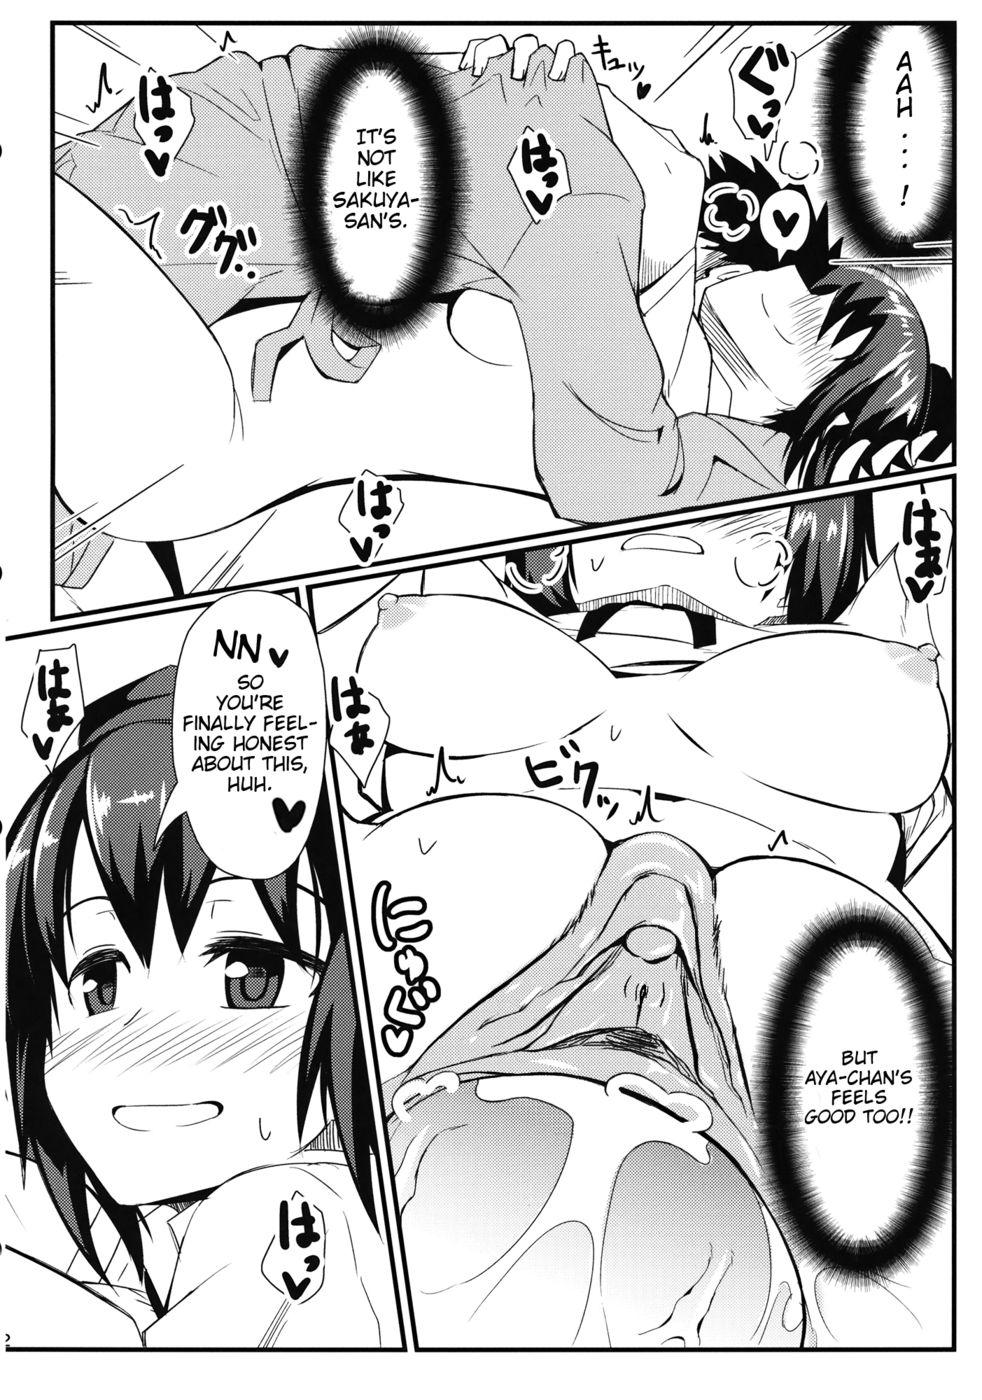 Hentai Manga Comic-GIRLFriend's 3-Read-11